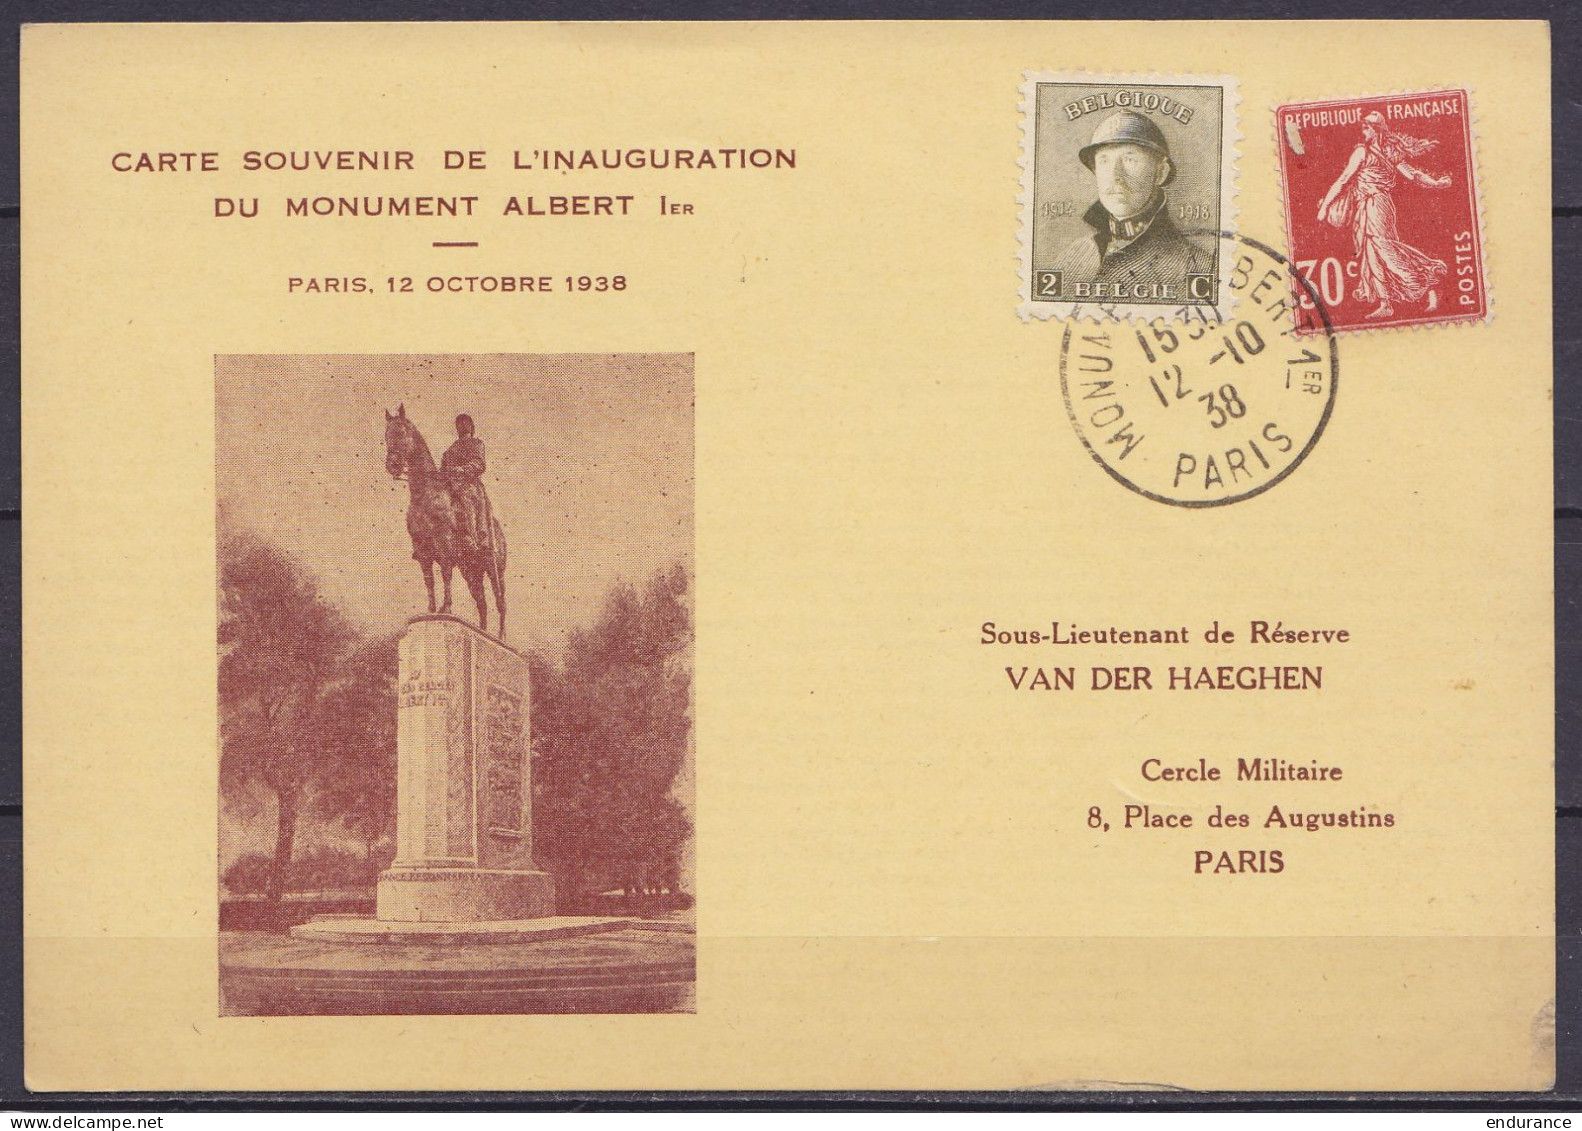 Carte Souvenir De L'inauguration Du Monument Albert 1e Affr. N°166 + Semeuse 30c Càd "MONUMENT ALBERT 1e /12-10-1938/ PA - 1919-1920 Behelmter König